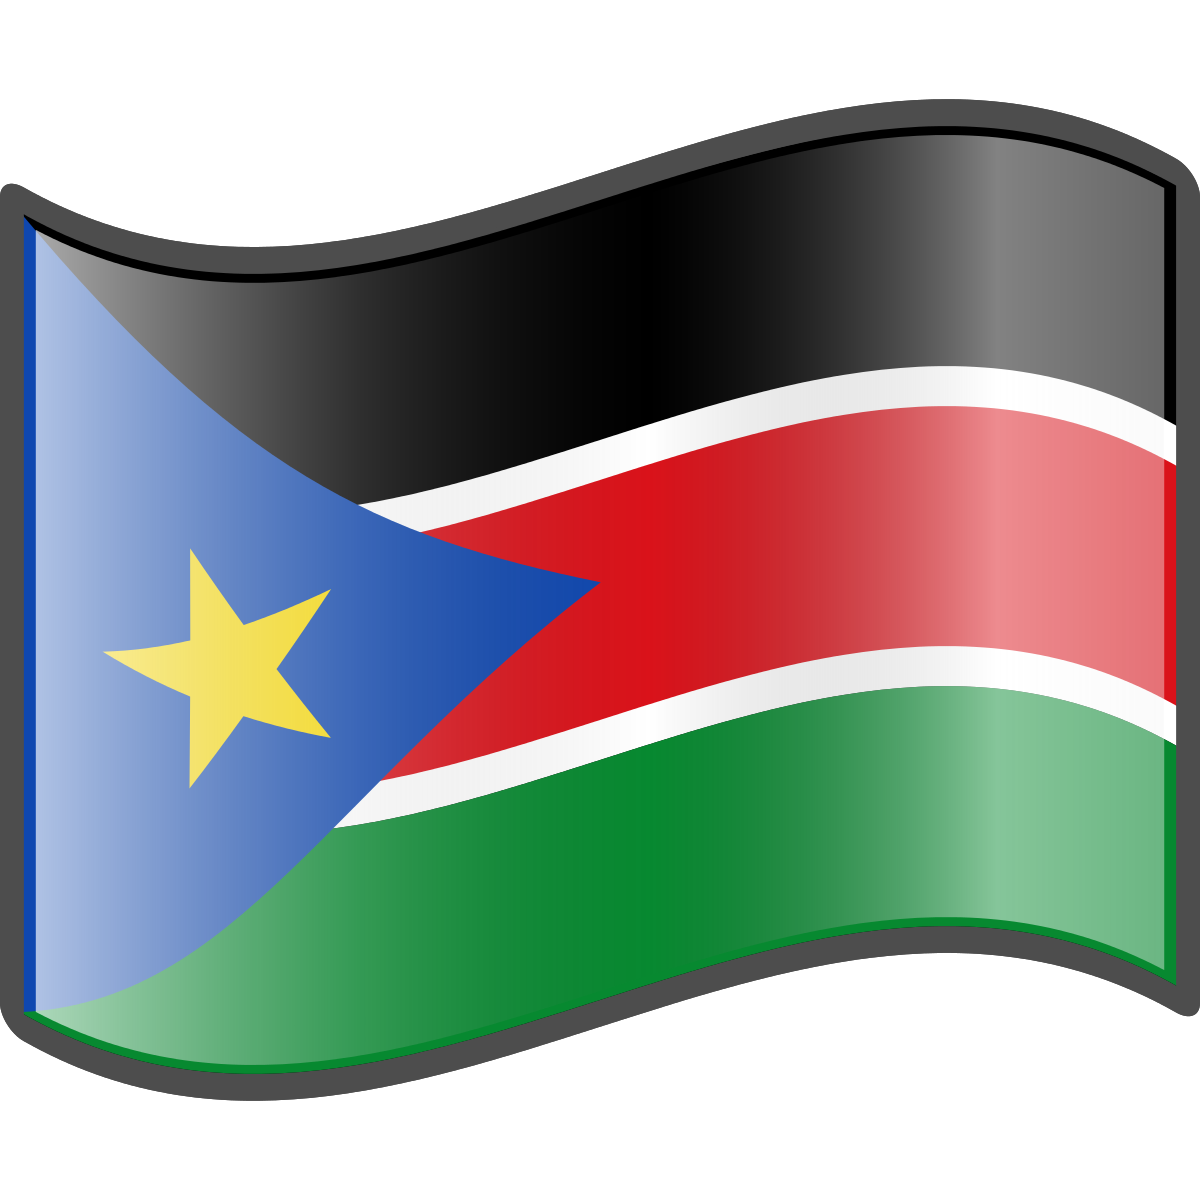 Sudan Flag PNG HD Quality